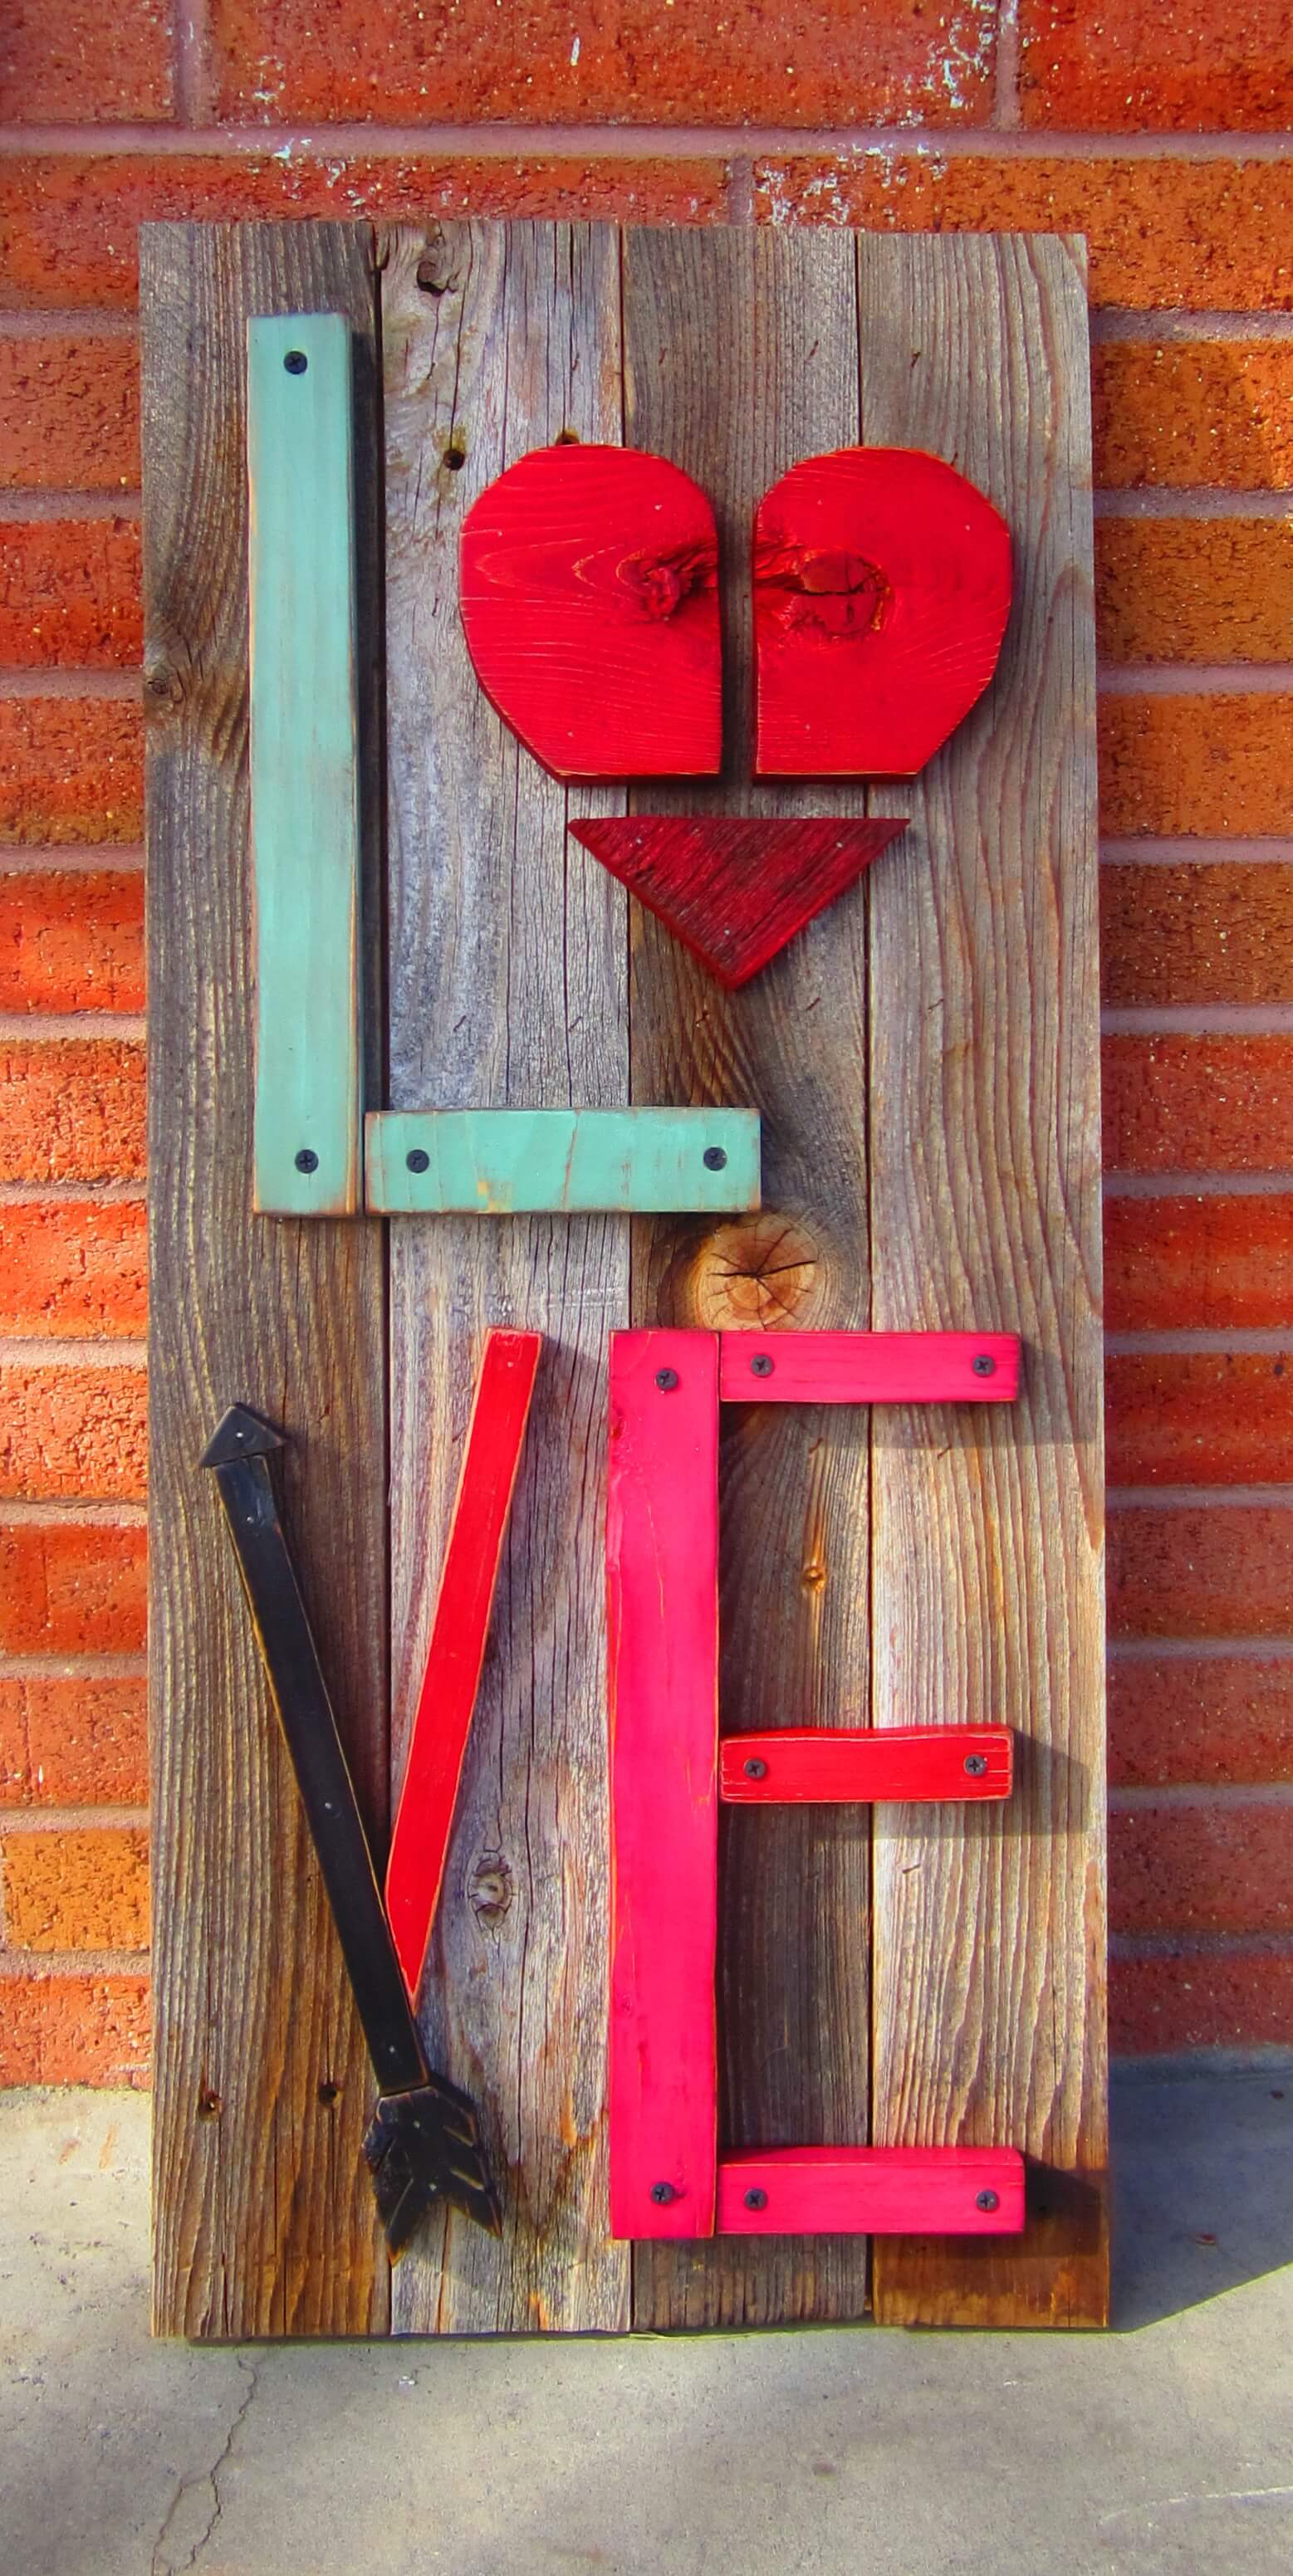 04 rustic love wood signs ideas homebnc.jpg